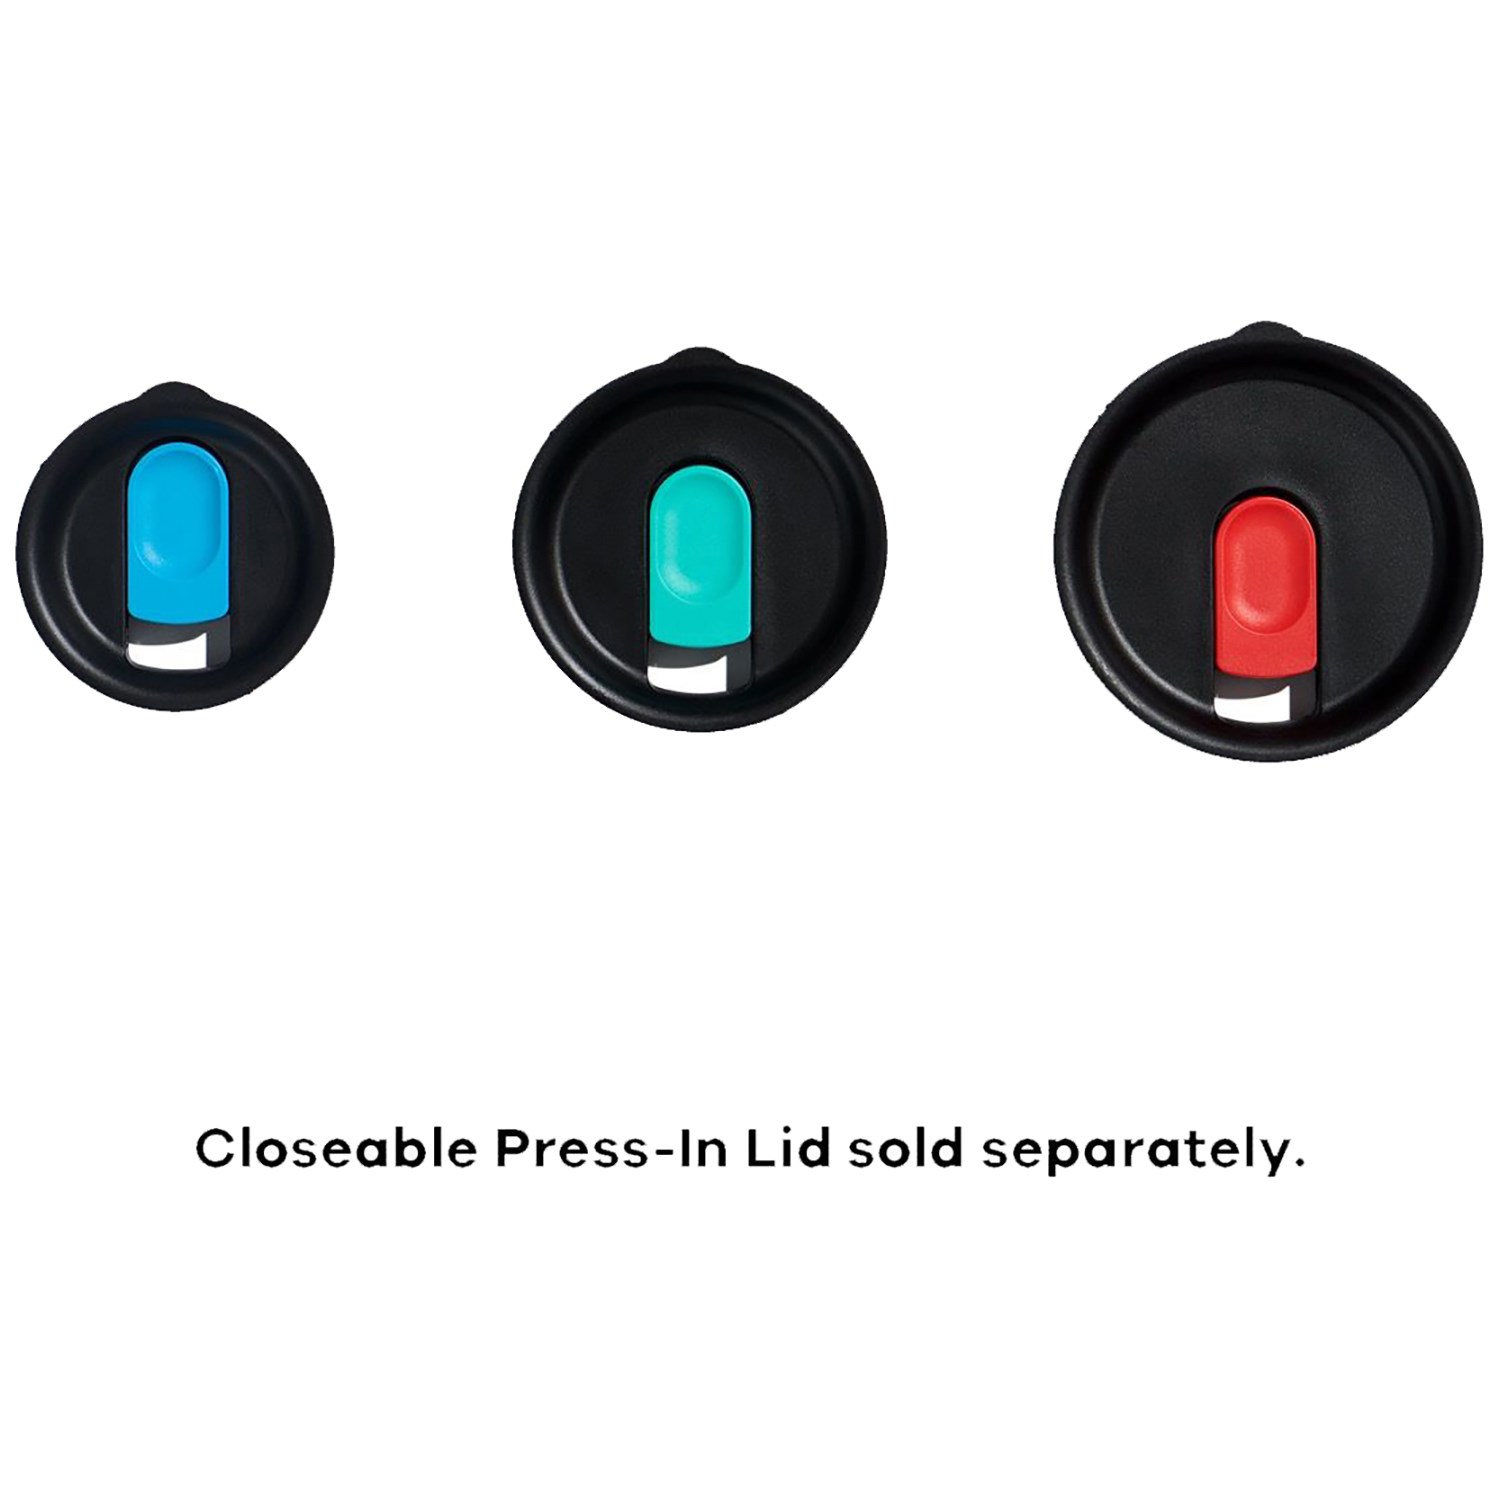 Hydro Flask Medium Closeable Press-In Lid